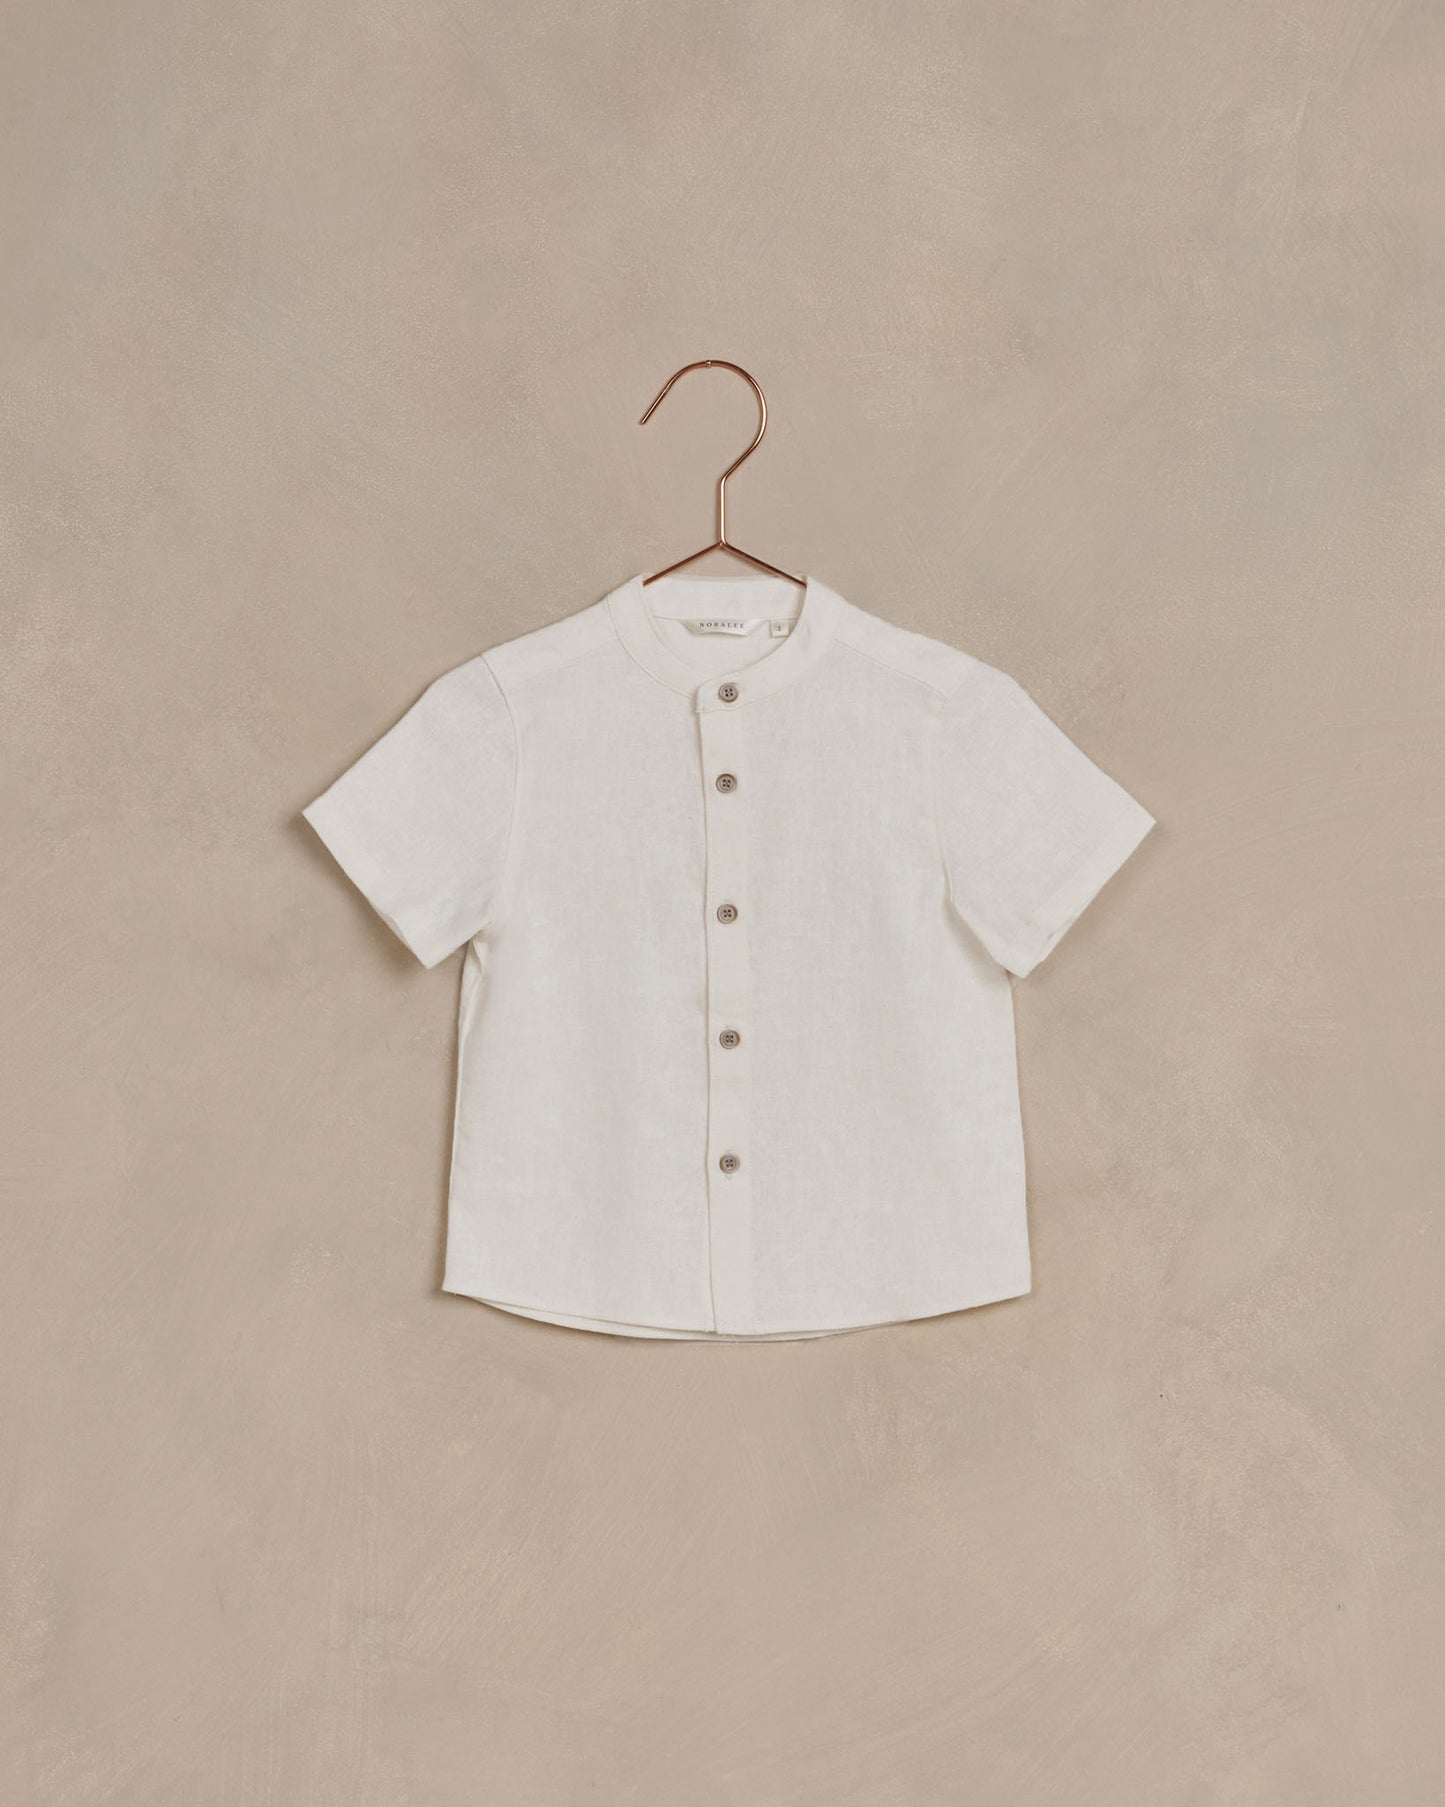 Noralee Archie Shirt || White